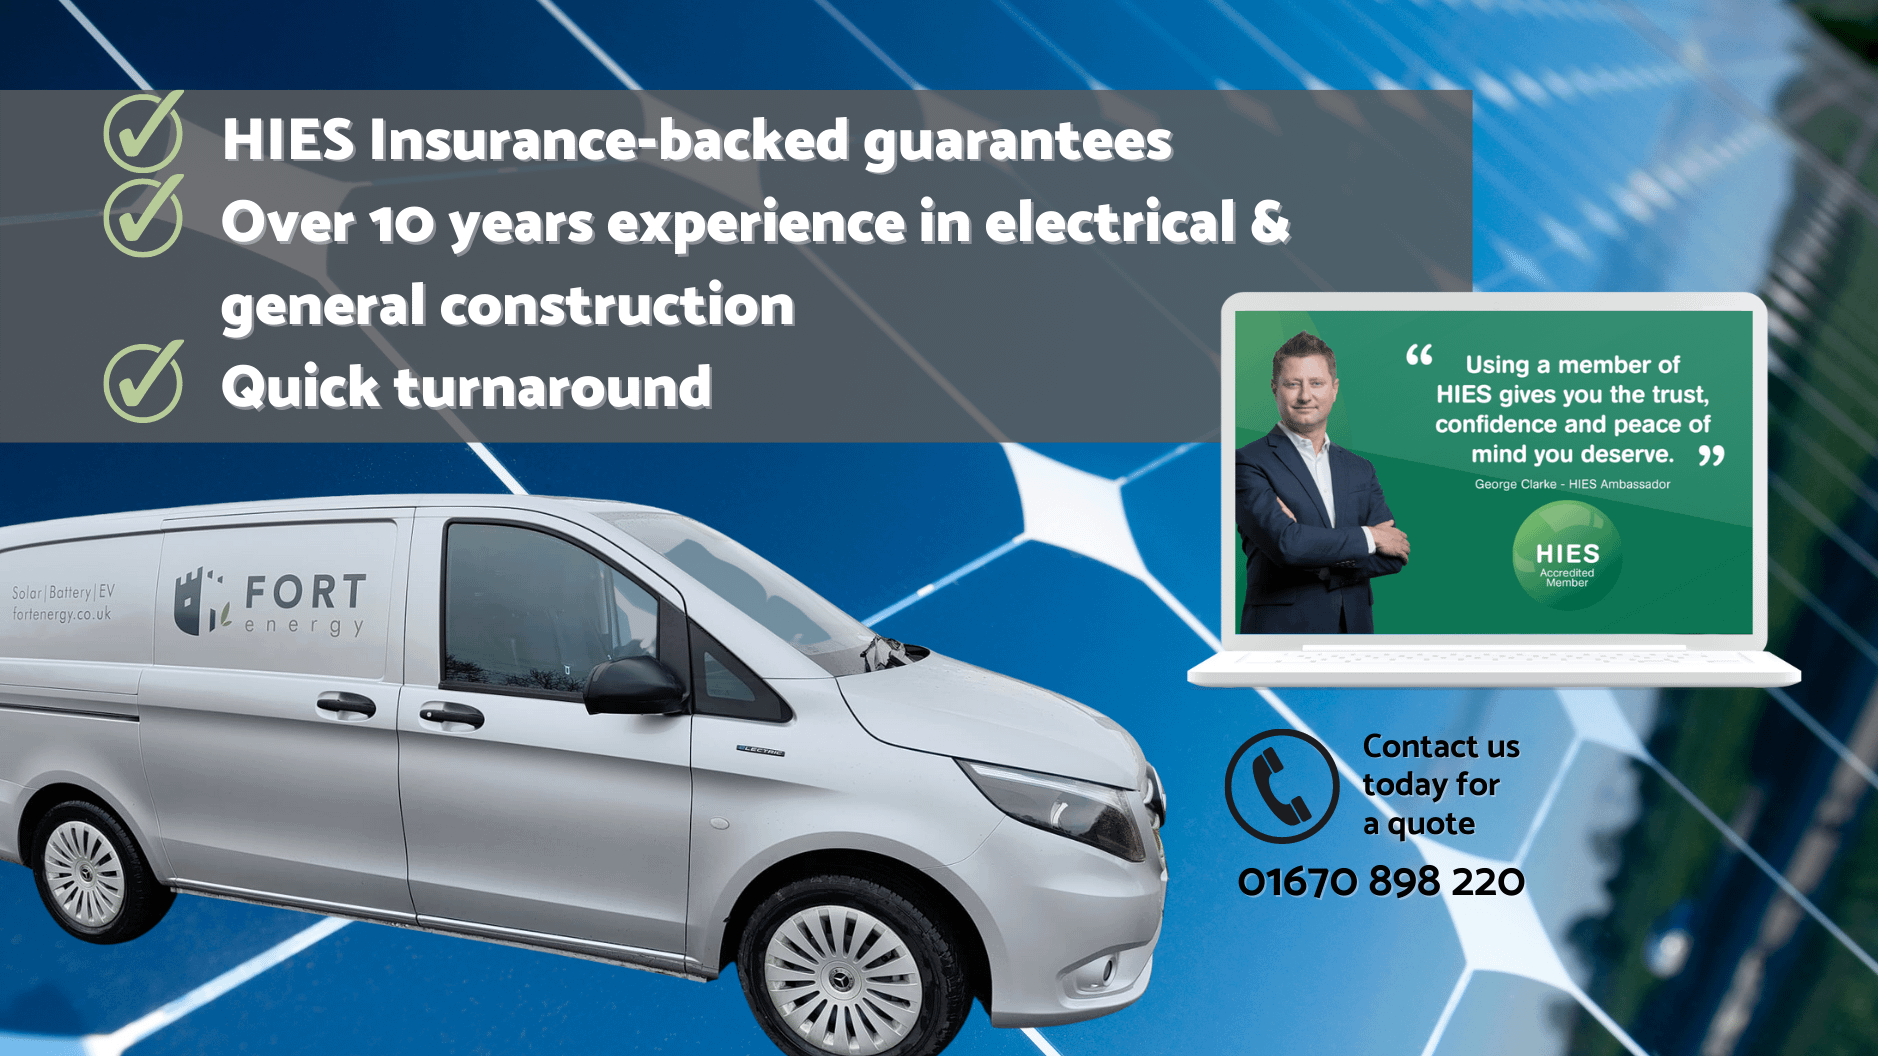 HIES Insurance backed guarantee